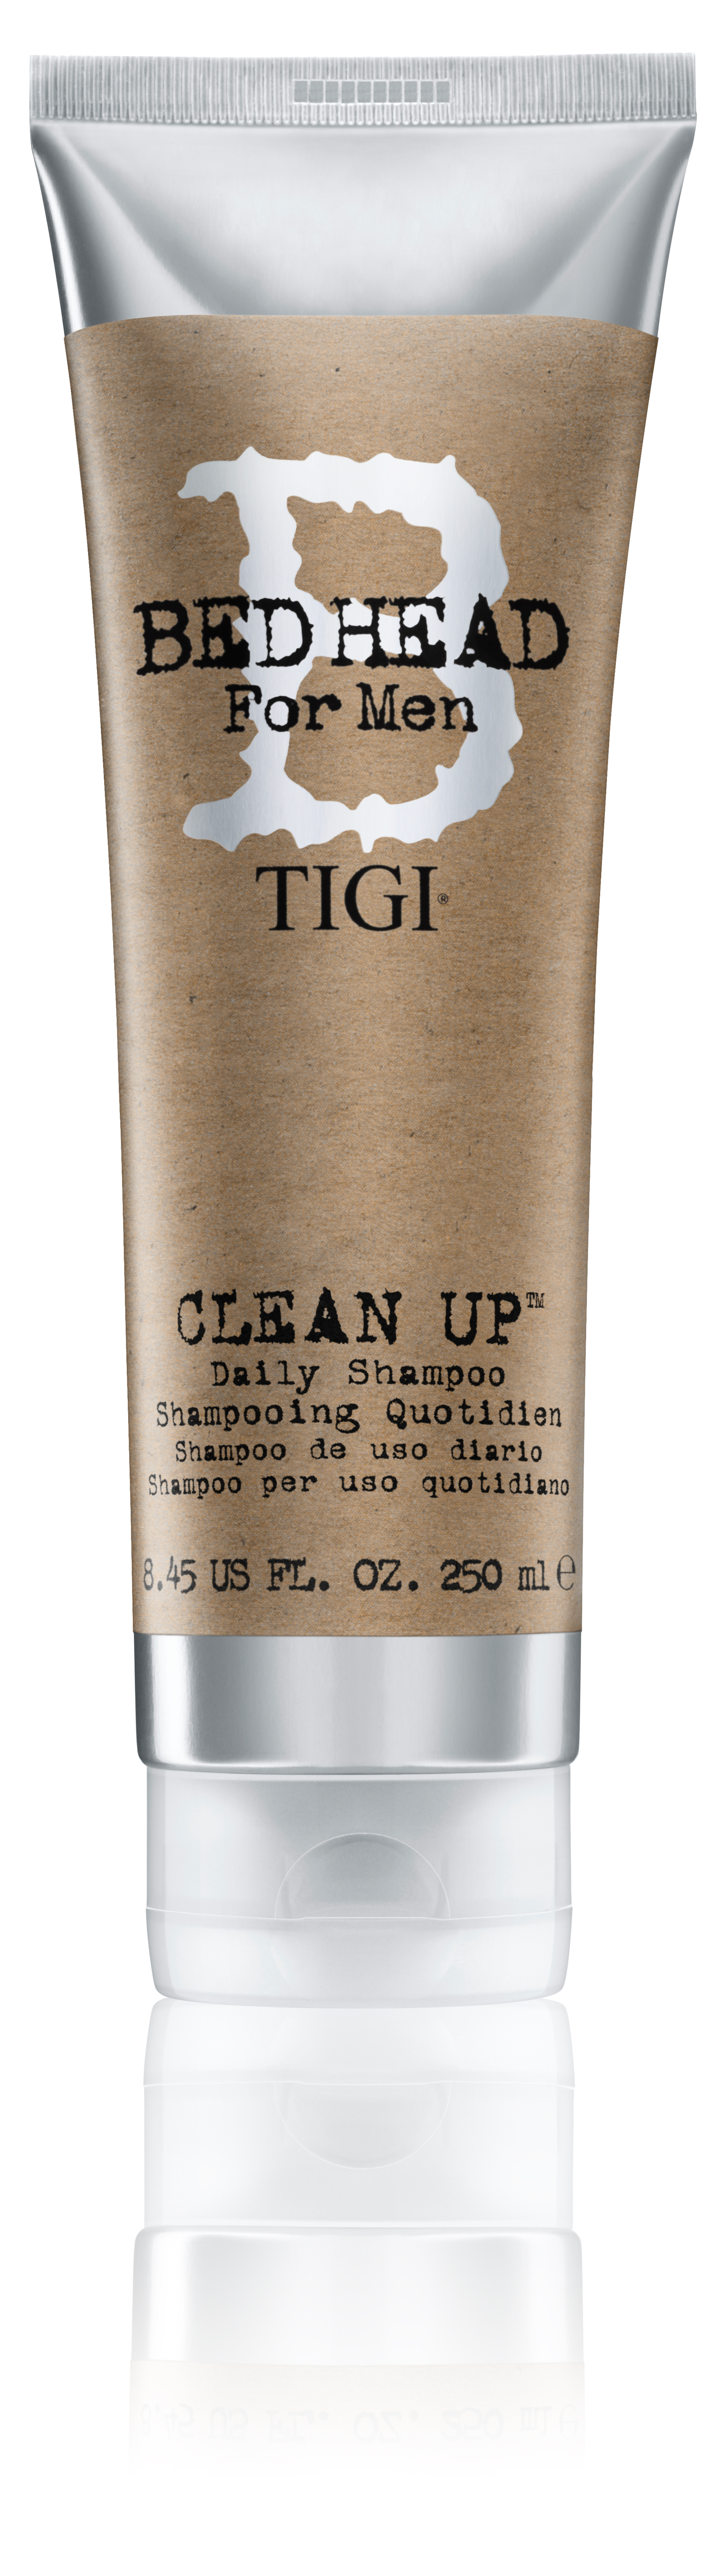 Tigi Bed Head For Men Clean up daily 250ml shampoo